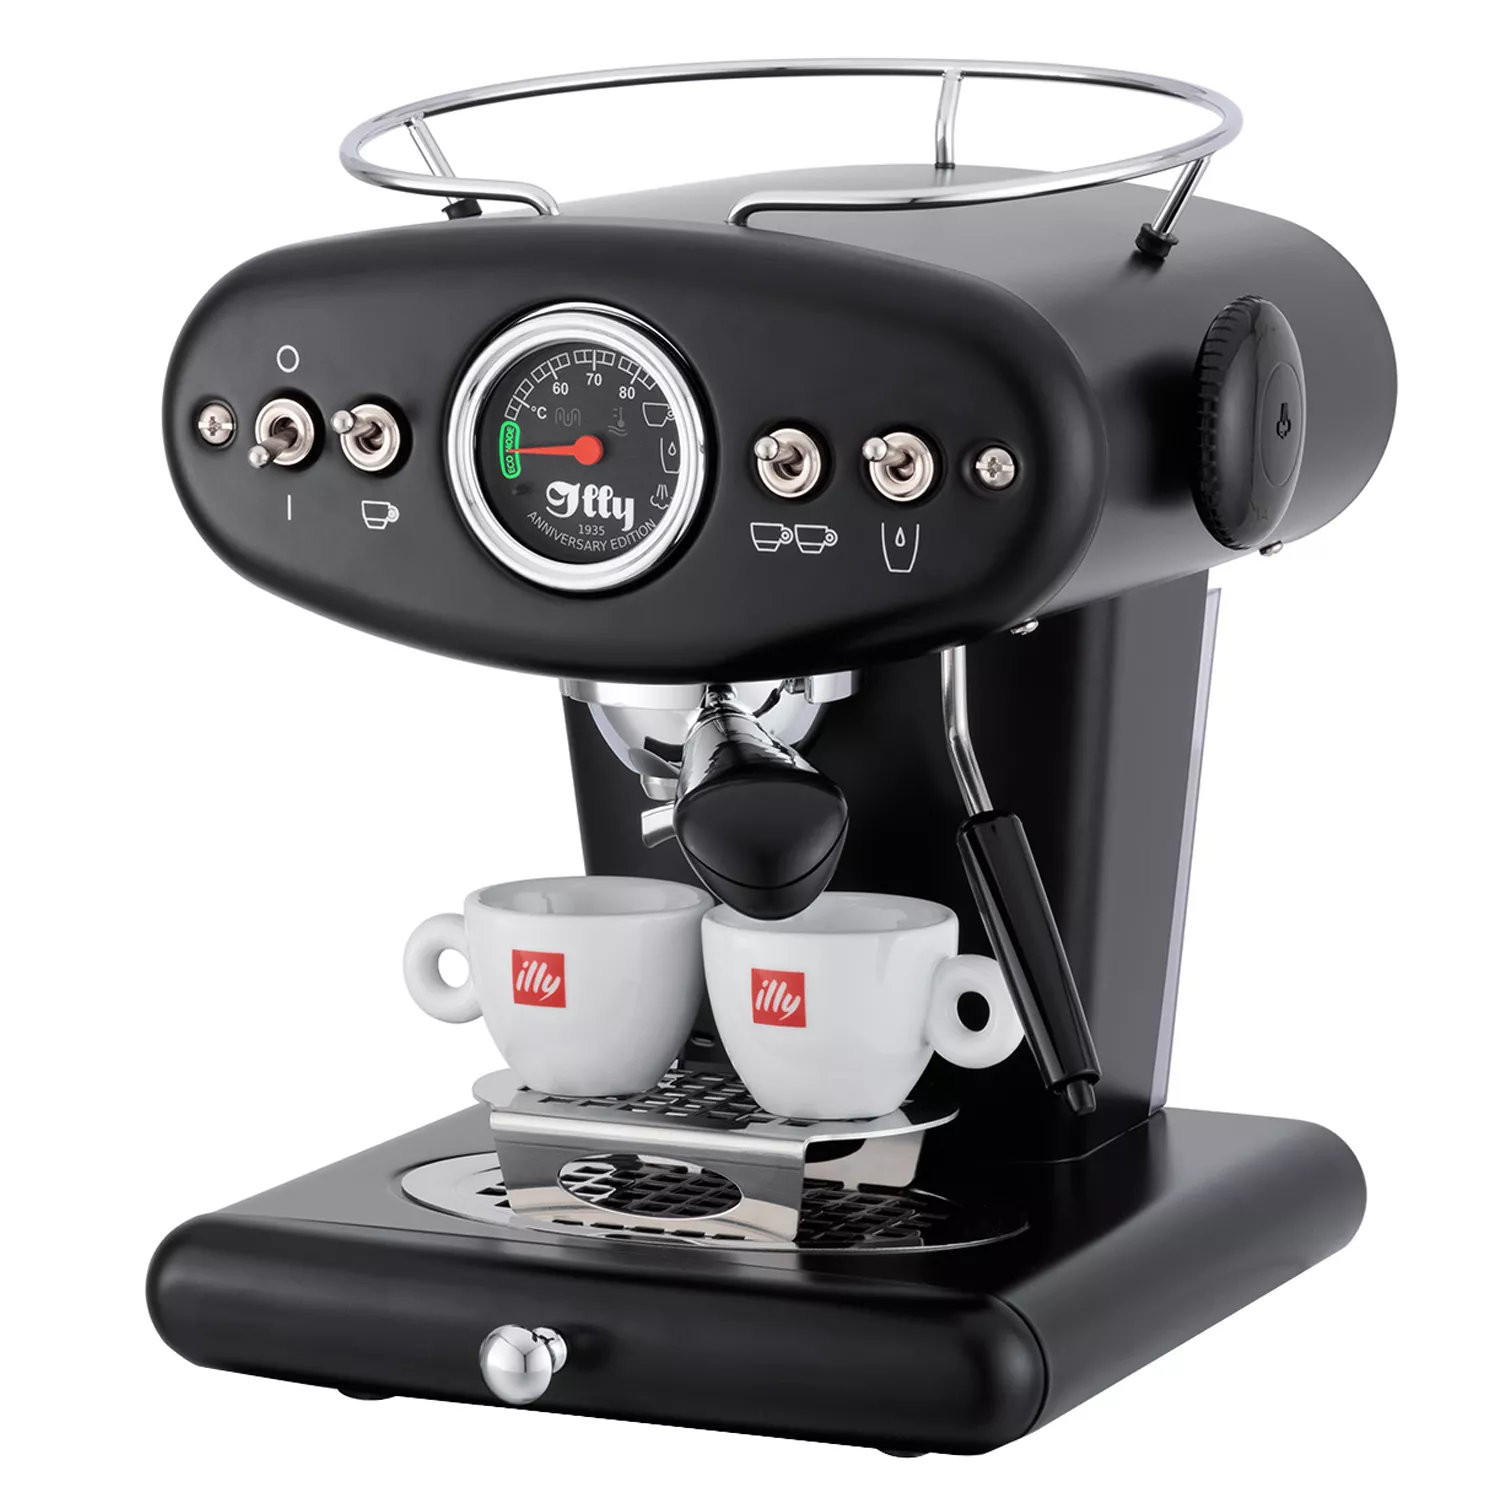 ground coffee dispenser in Coffee & Espresso Machines